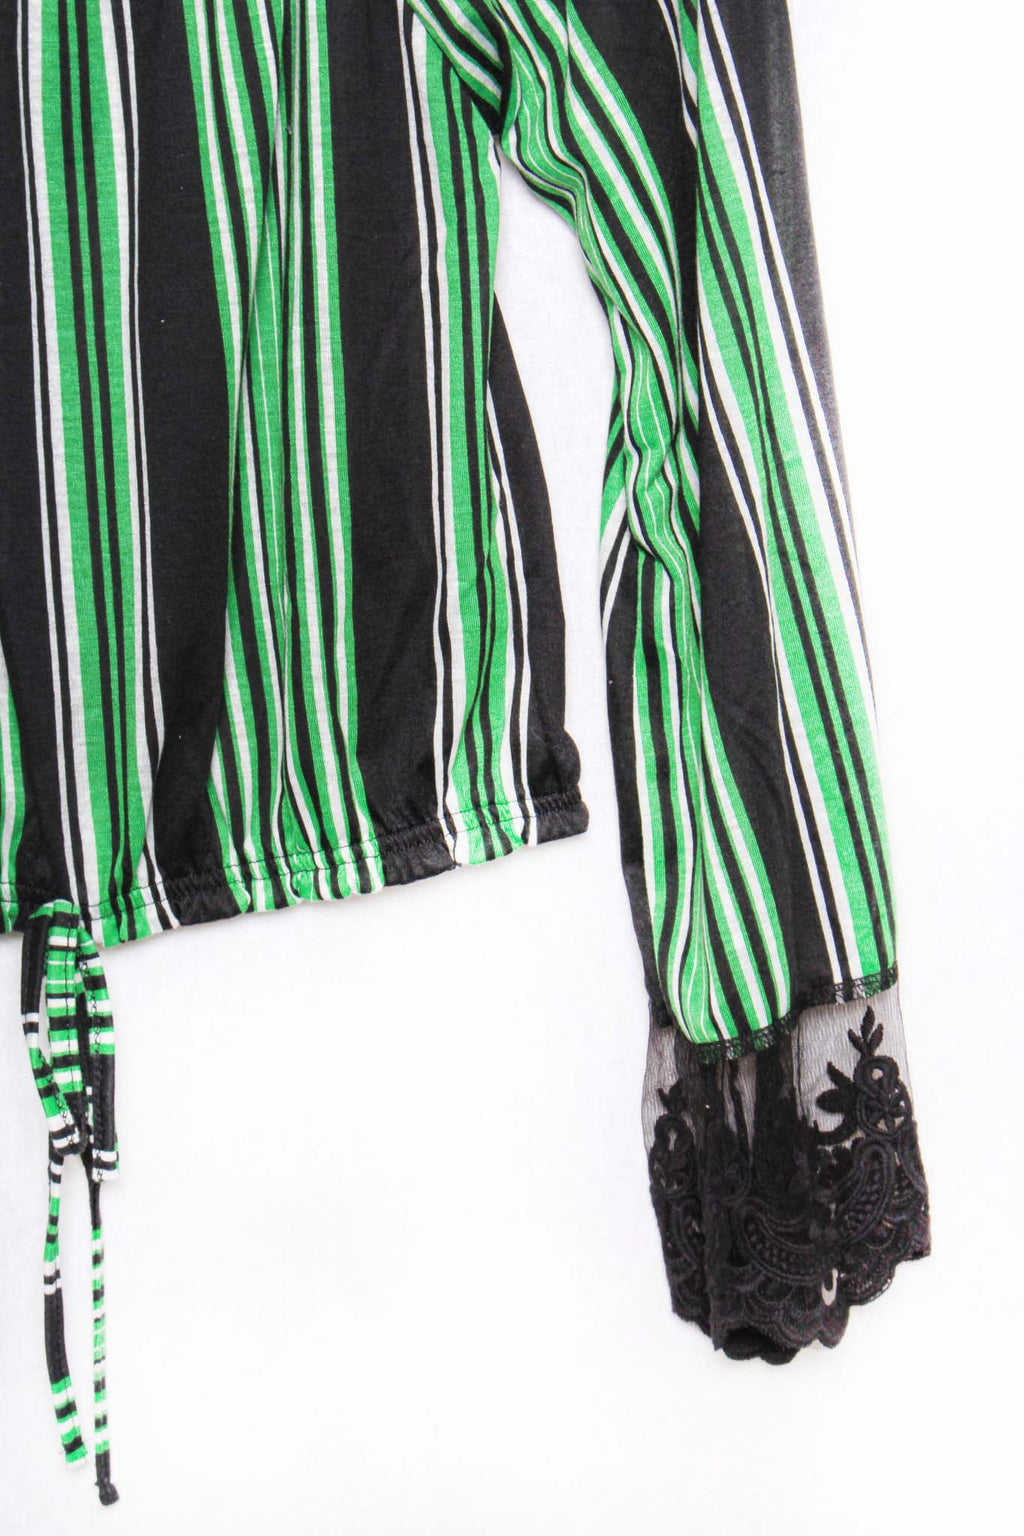 Women's Long Sleeve 2 Way Drawstring Stripes Crop Top